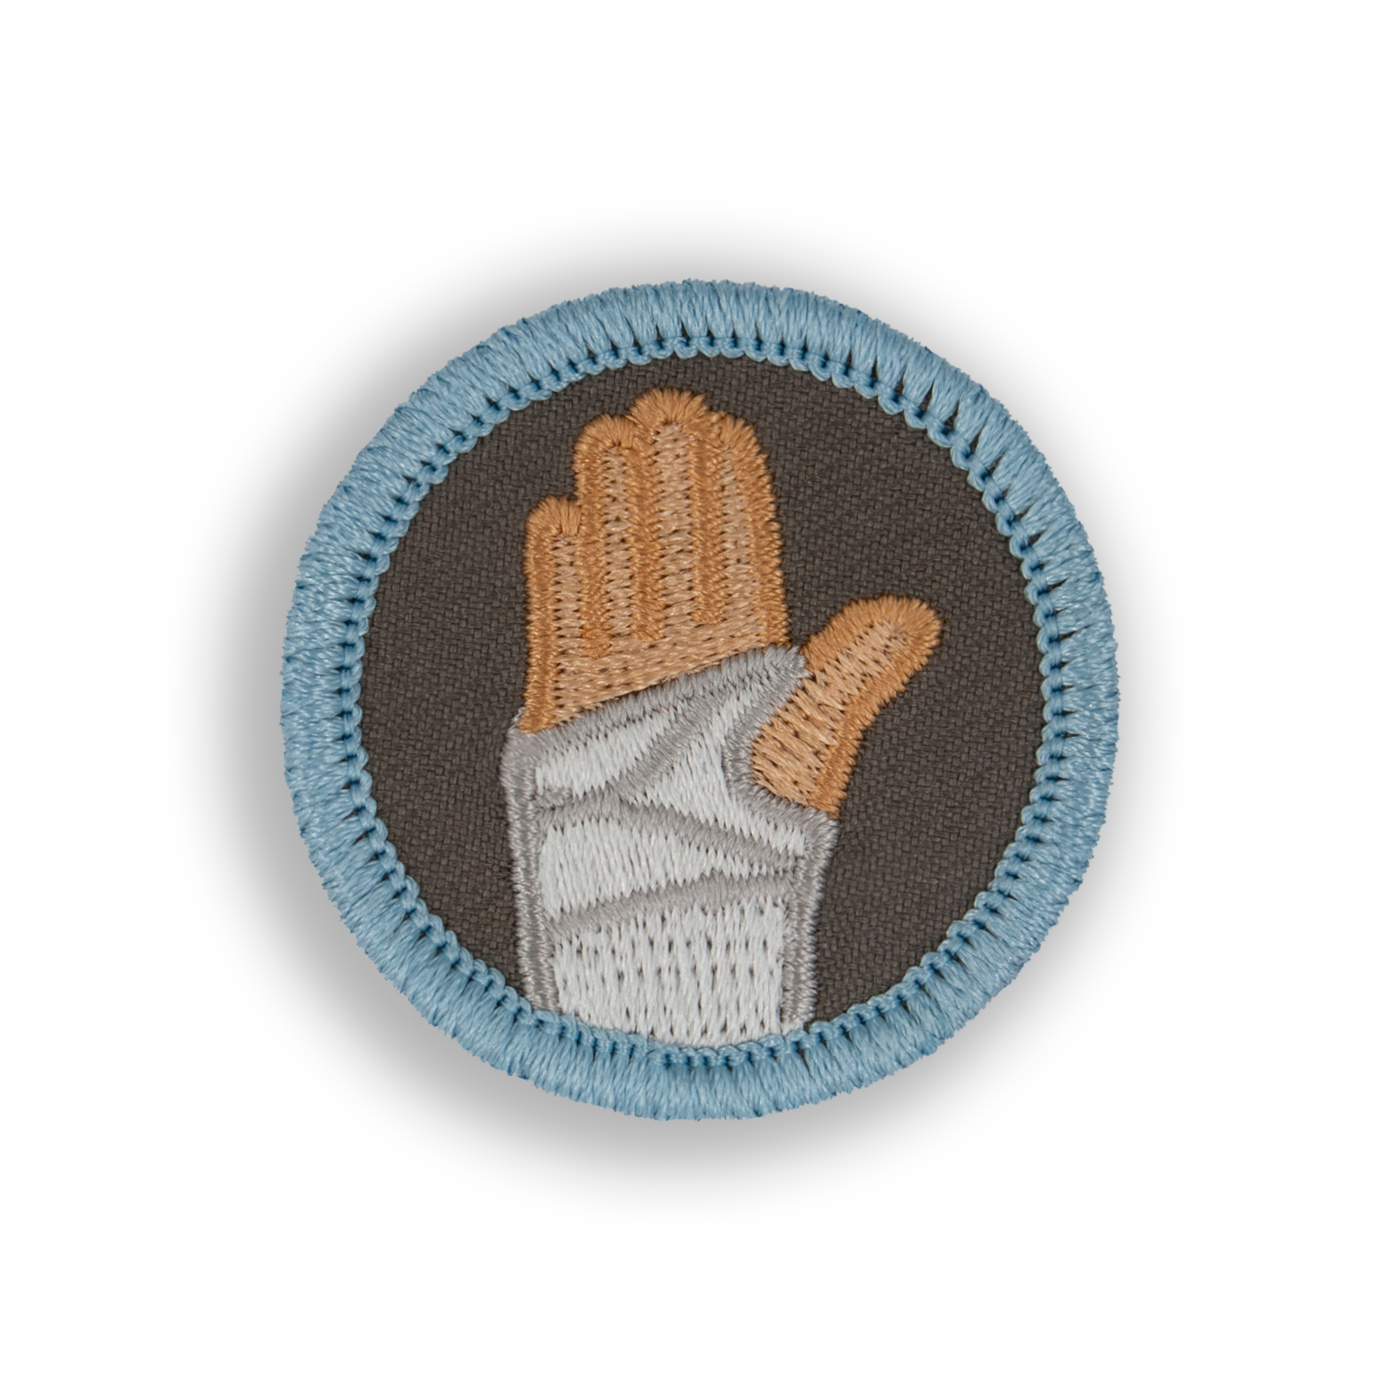 Broken Wrist Patch | Demerit Wear - Fake Merit Badges